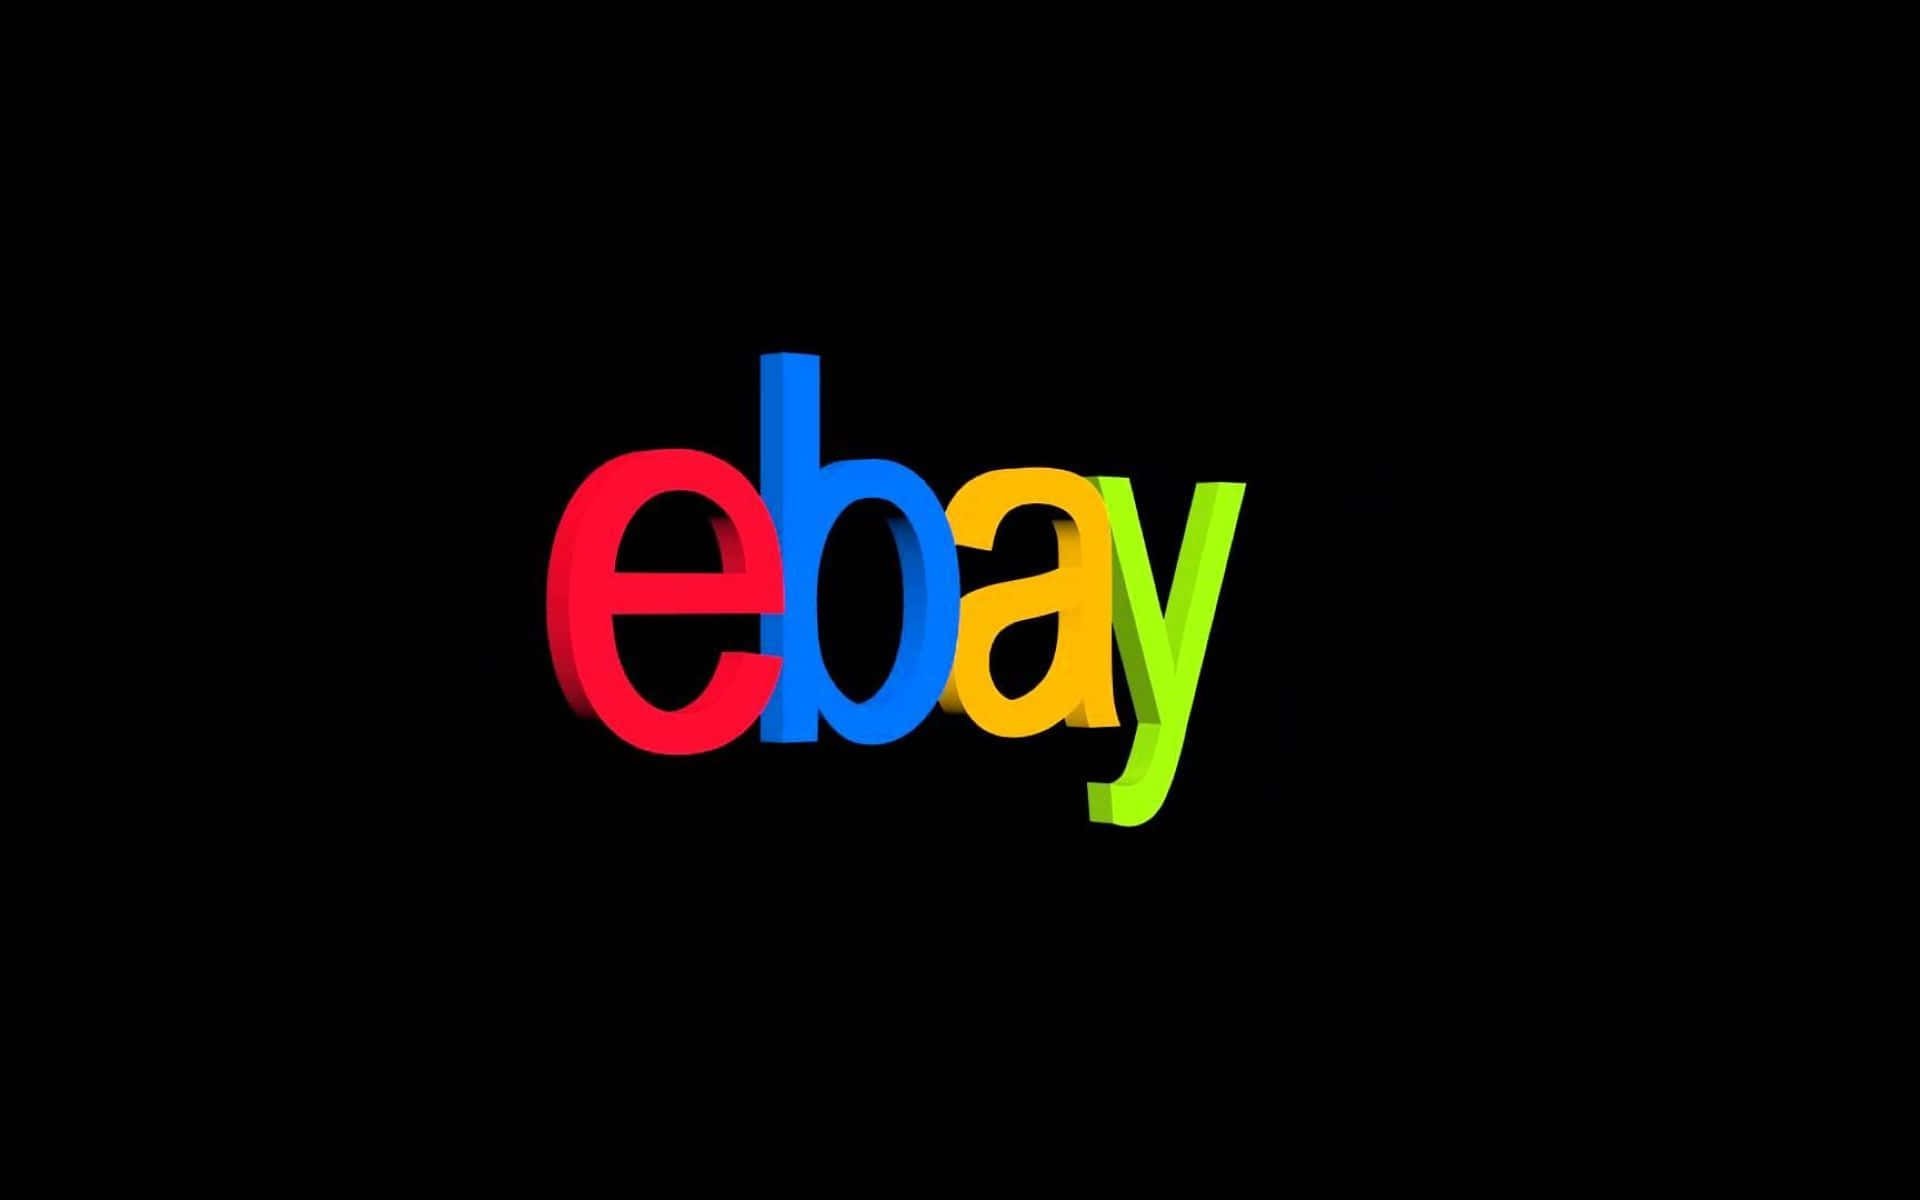 ebay desktop background